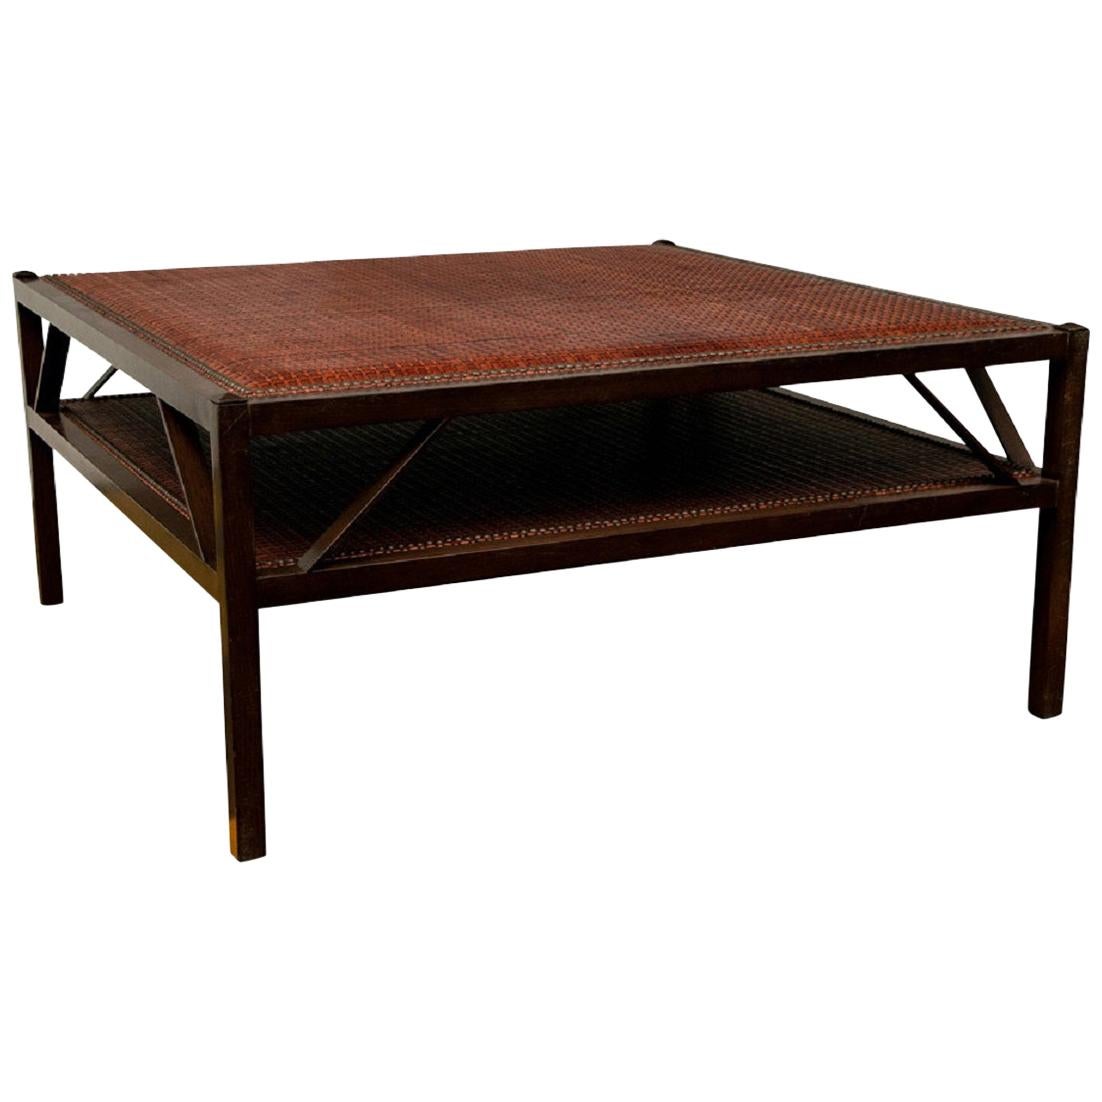 John Saladino Braided Leather “Duplex” Table/Ottoman